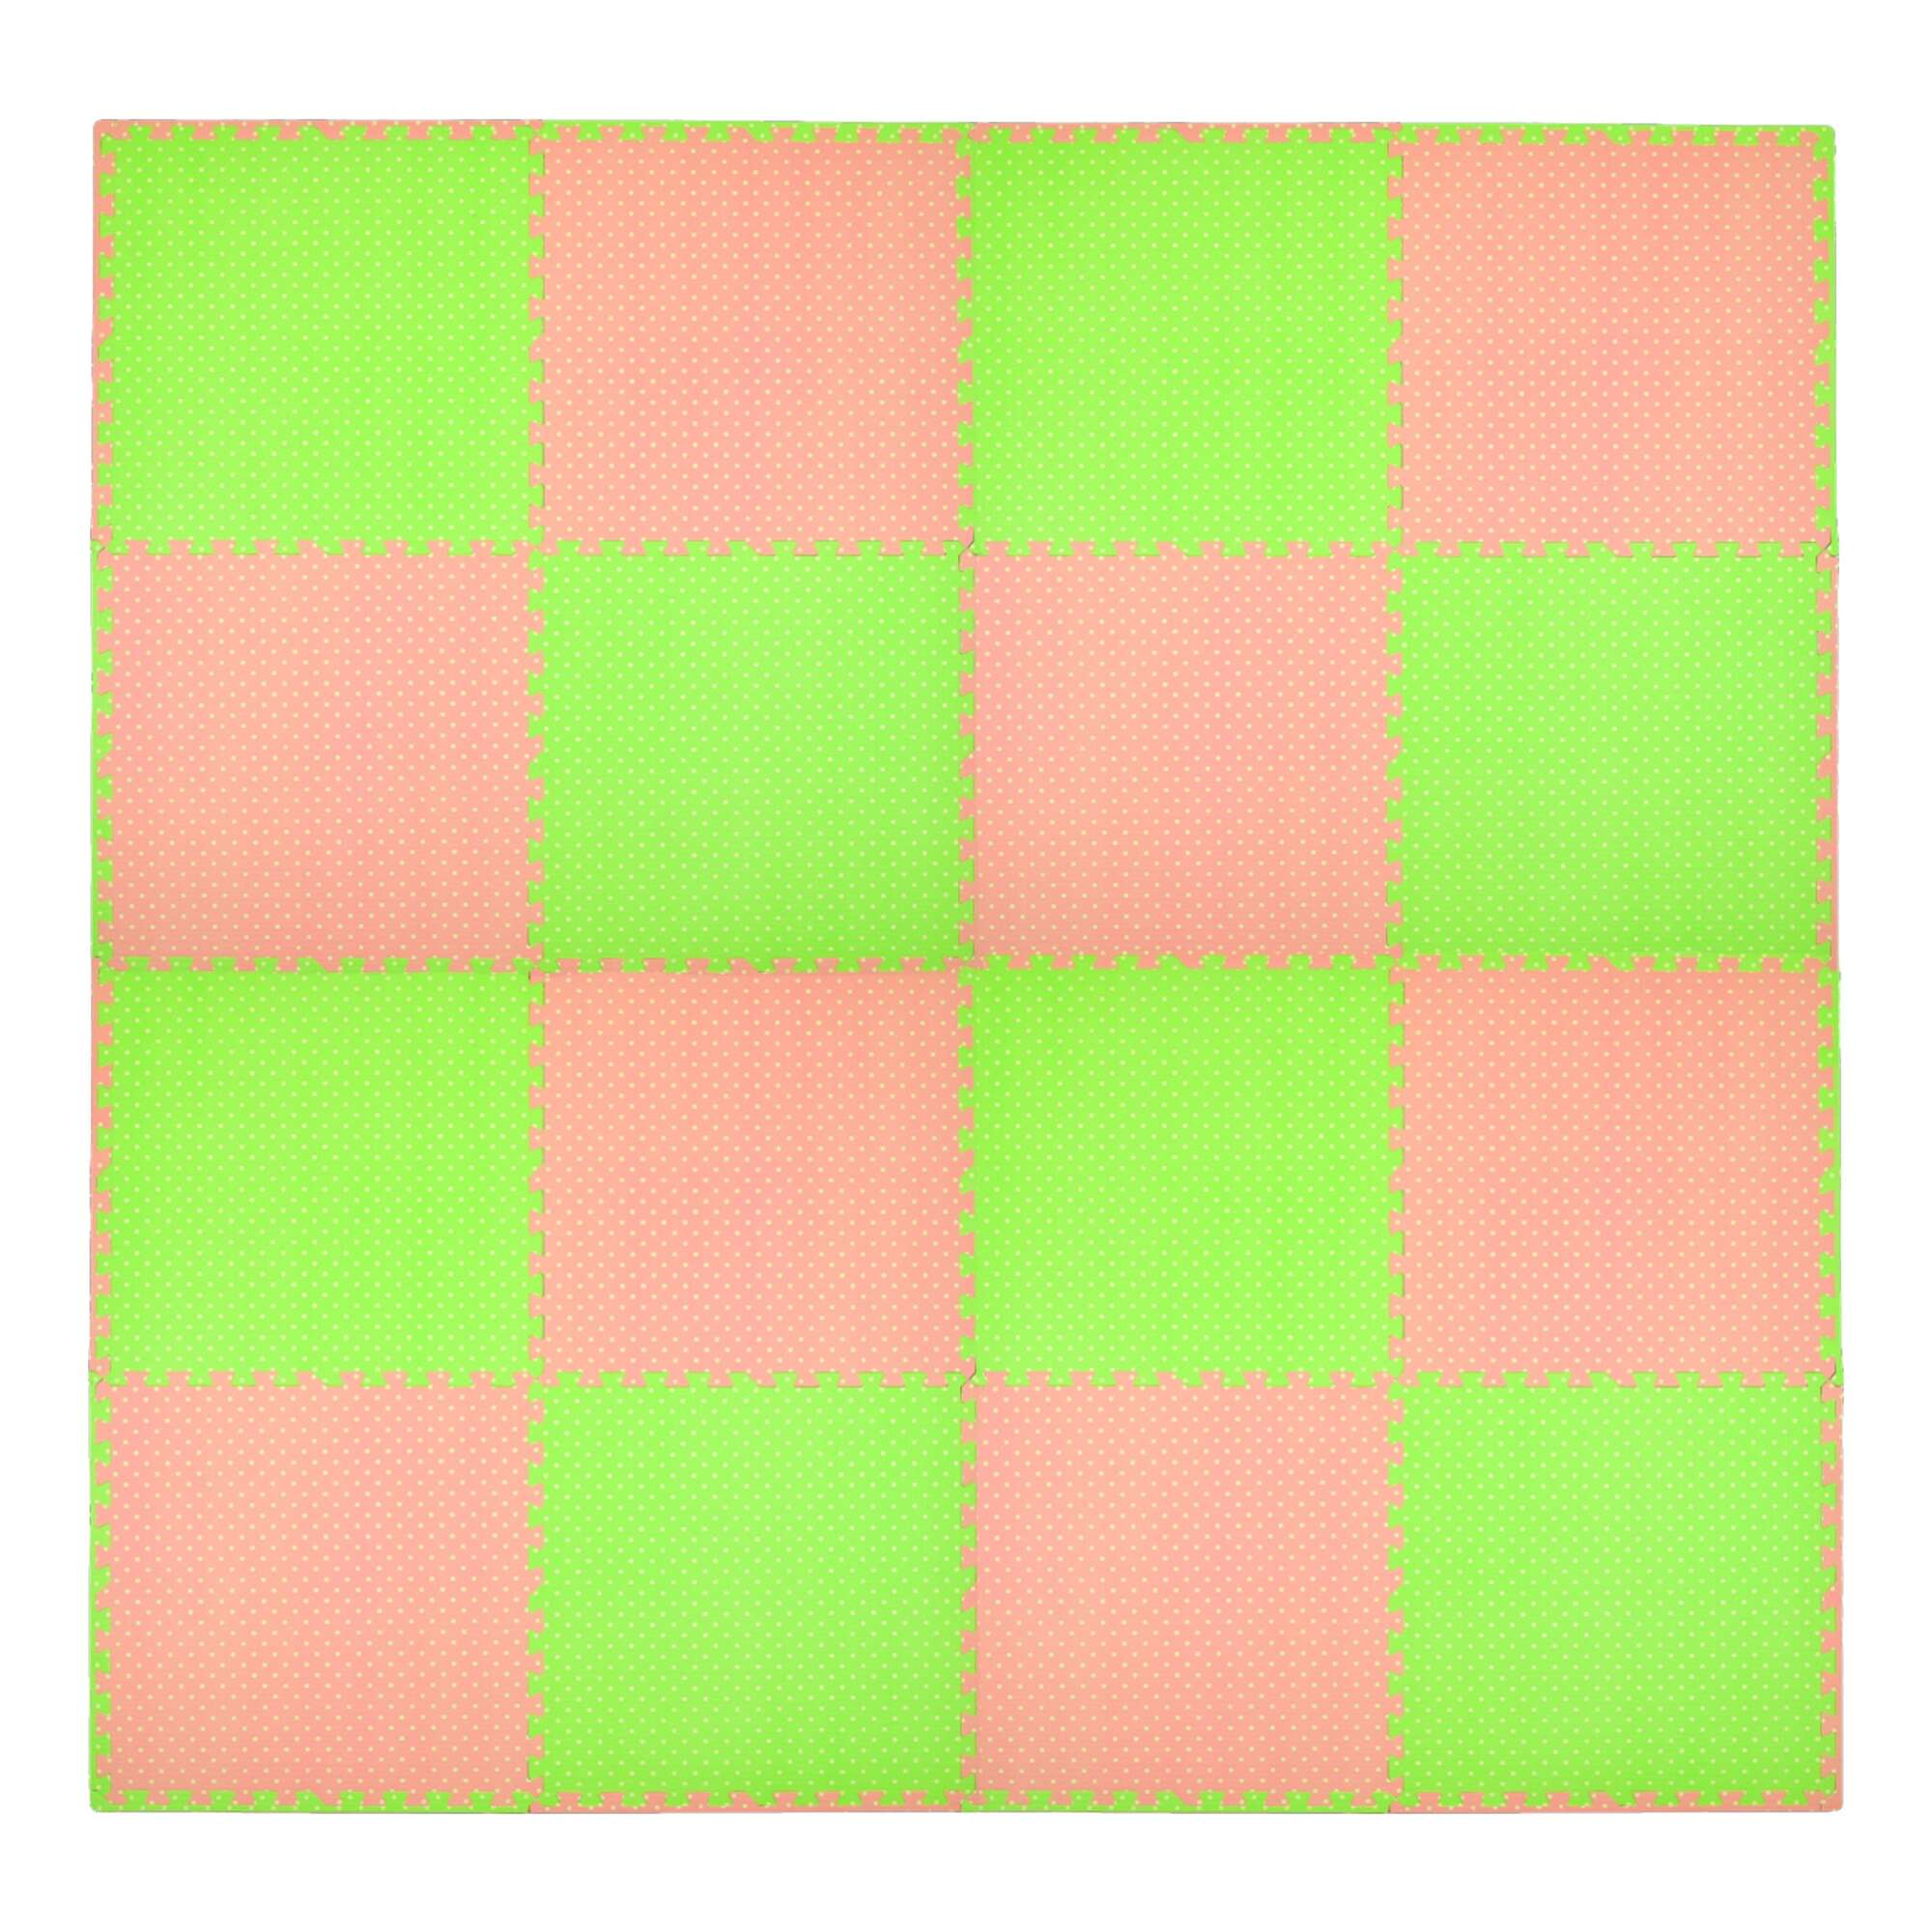 Humbi mata piankowa puzzle piankowe fitness wodoodporne pod basen 16 szt. rowo-zielona w kropki 240 x 240 x 1 cm